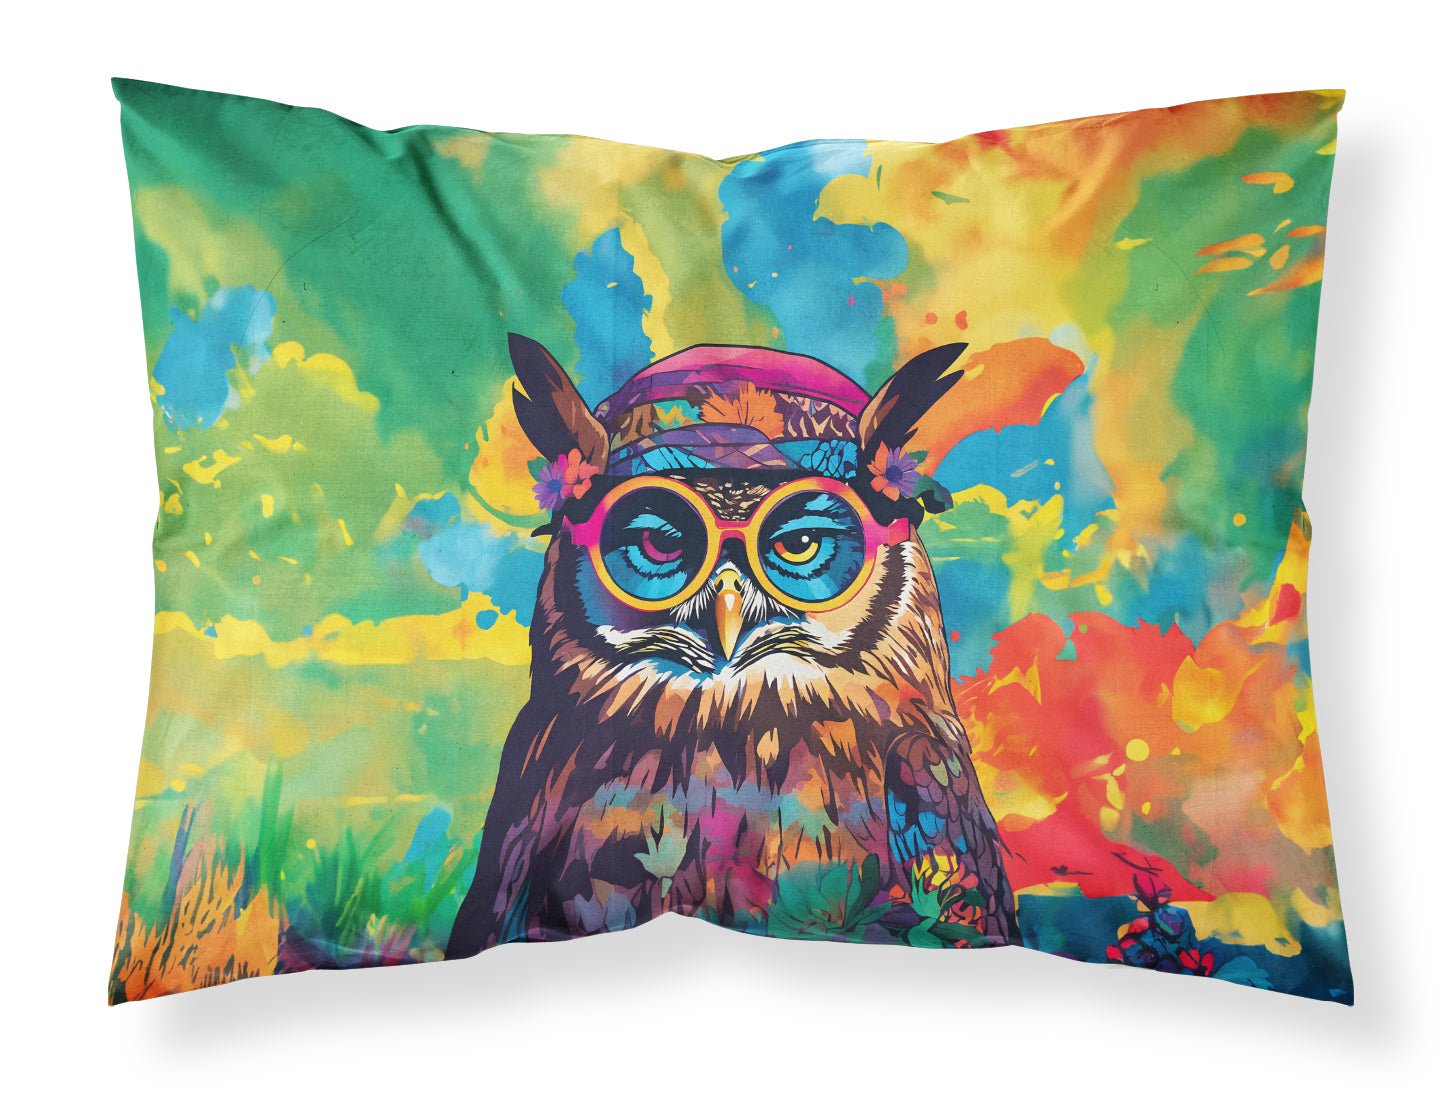 Buy this Hippie Animal Owl Standard Pillowcase